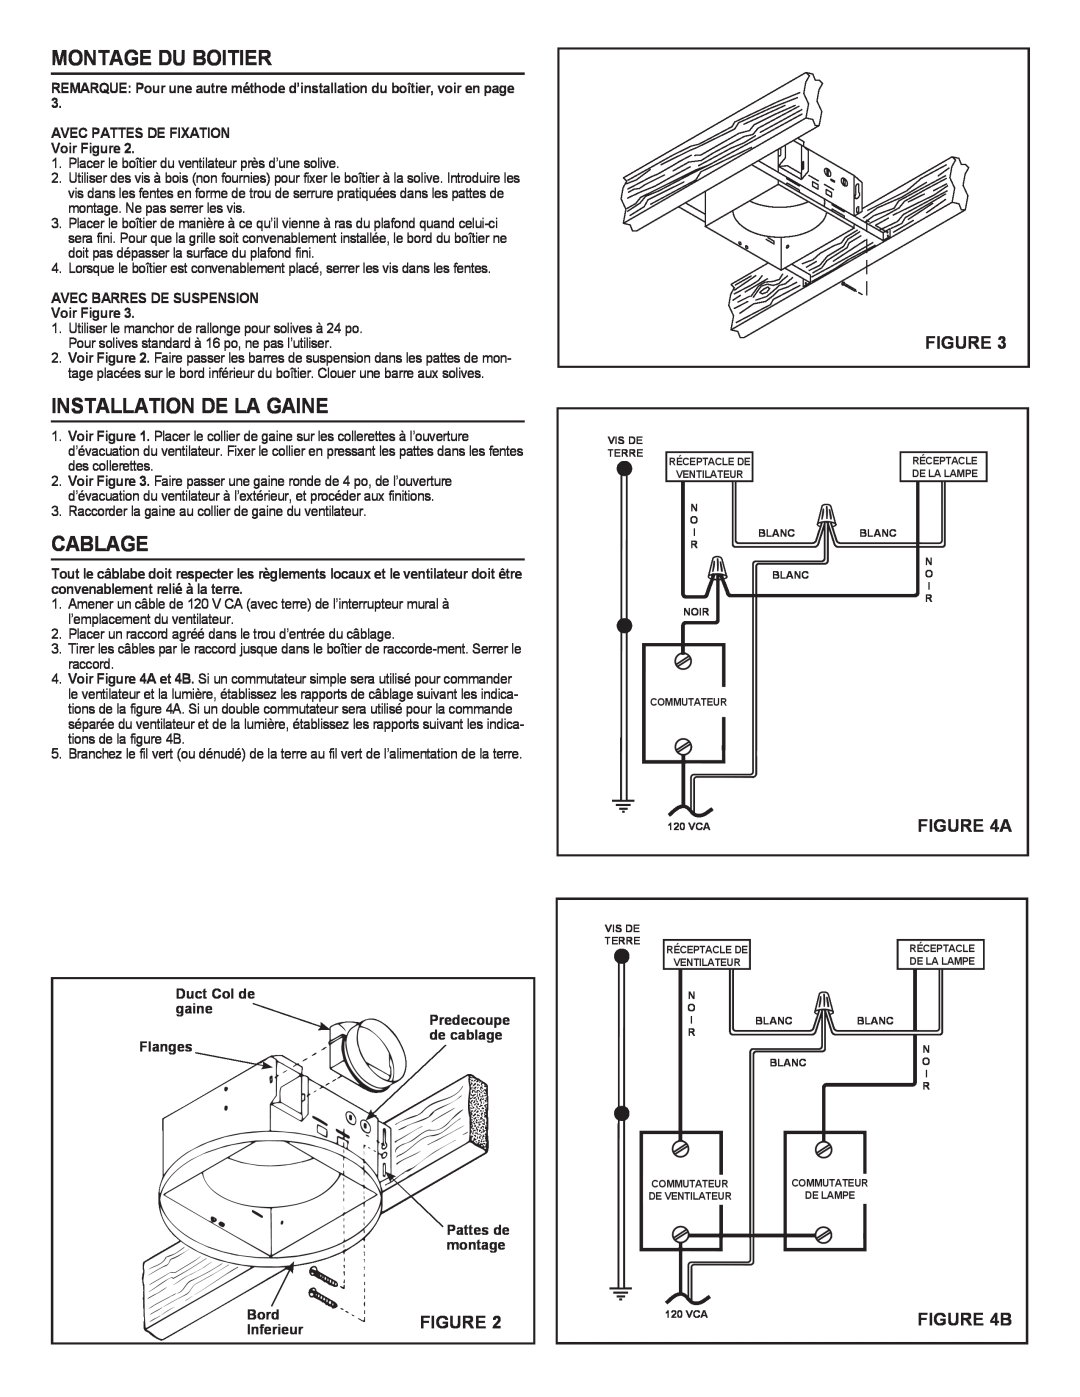 NuTone 8663RFT important safety instructions Montage Du Boitier, Installation De La Gaine, Cablage, A 